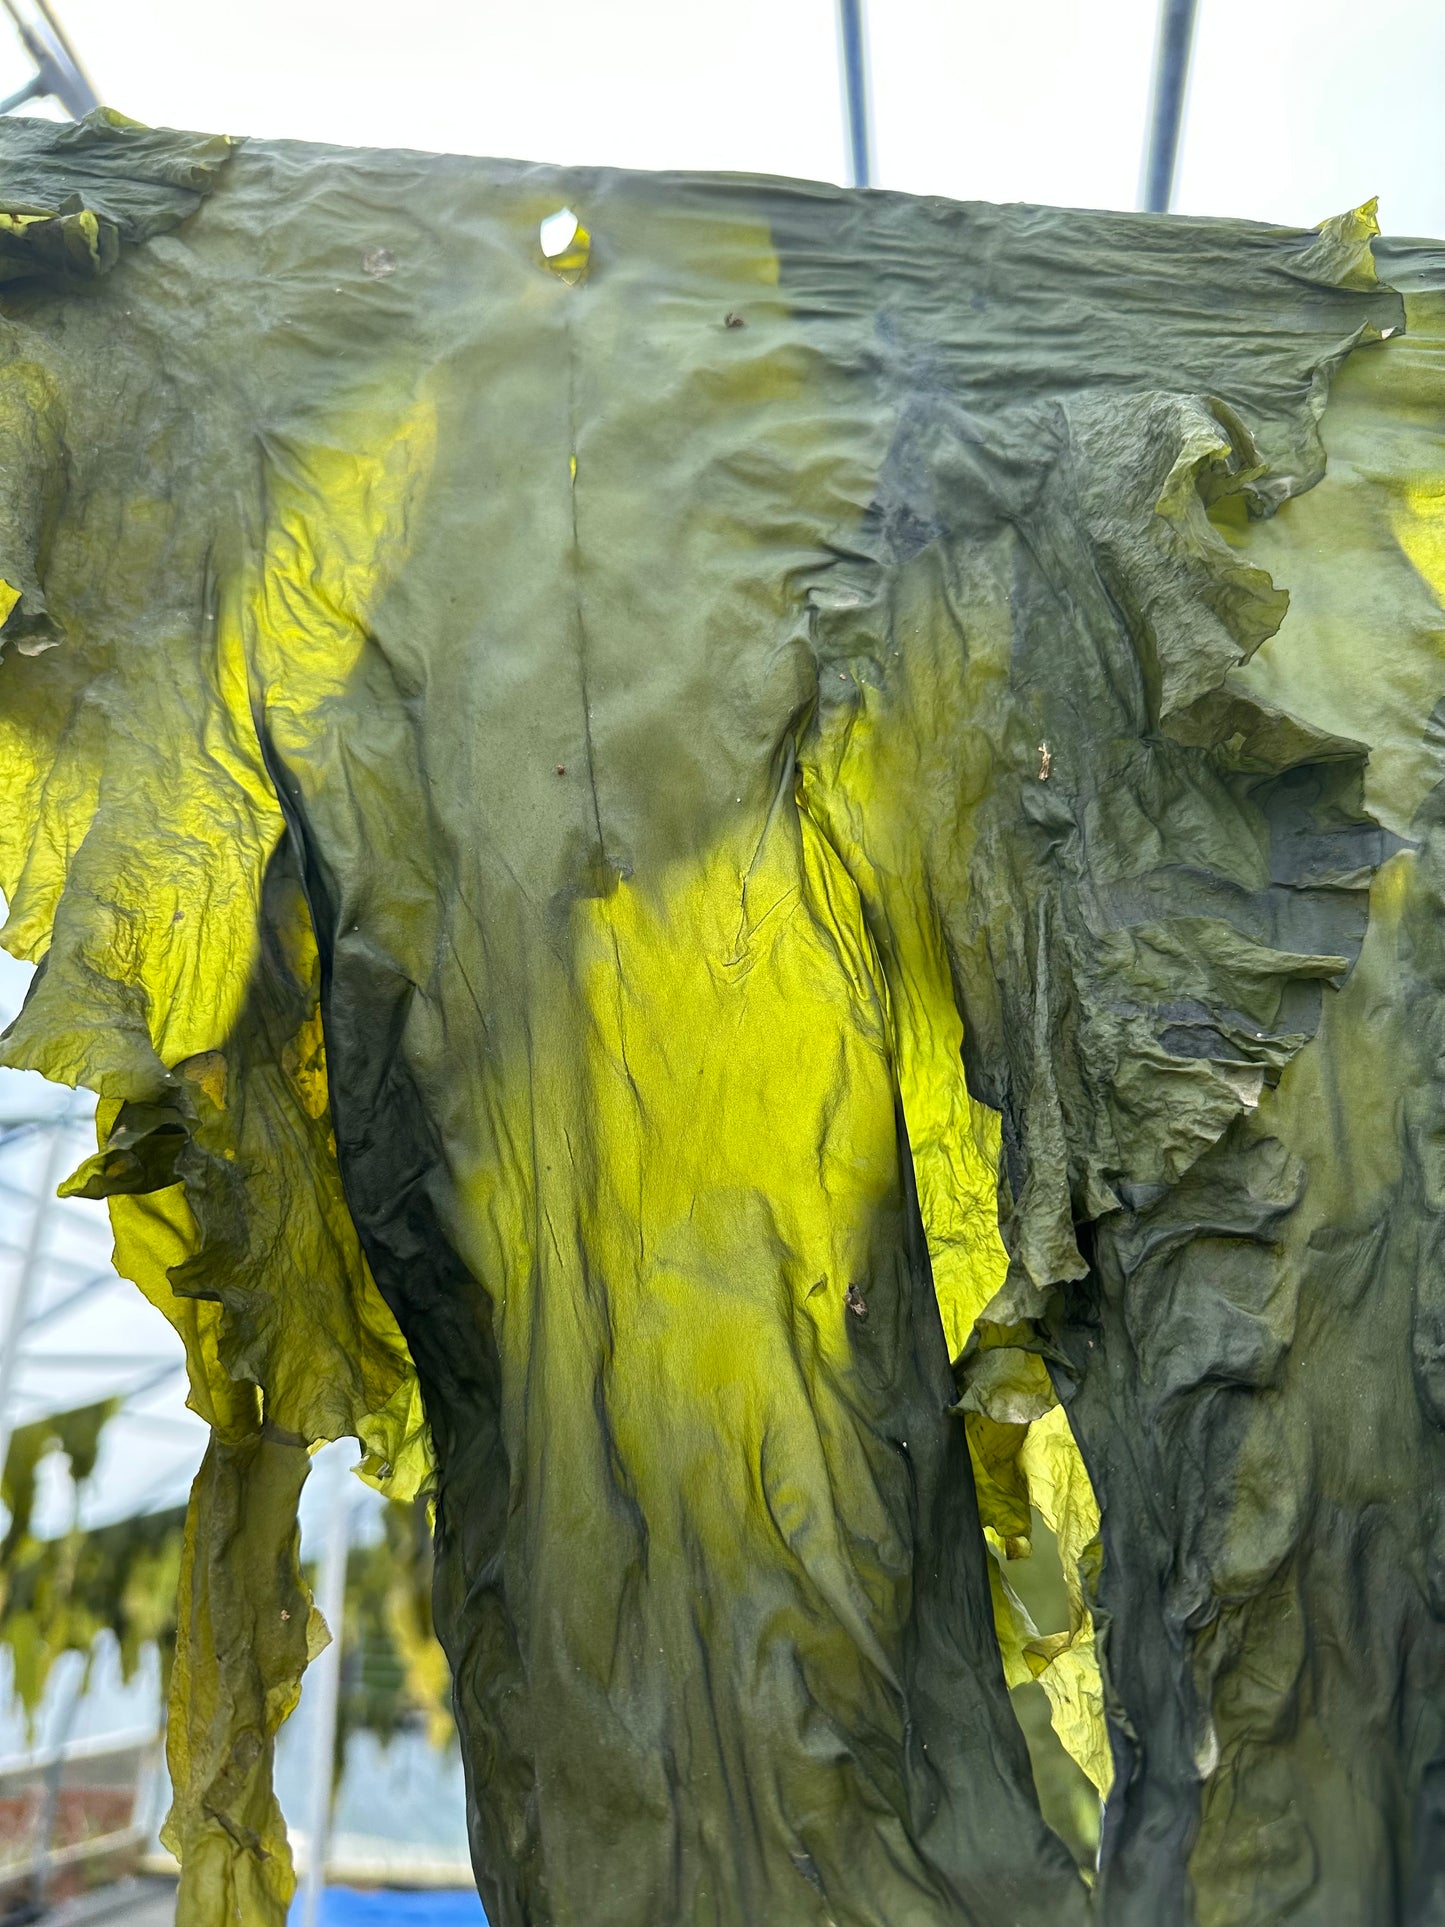 Cold Current Kelp